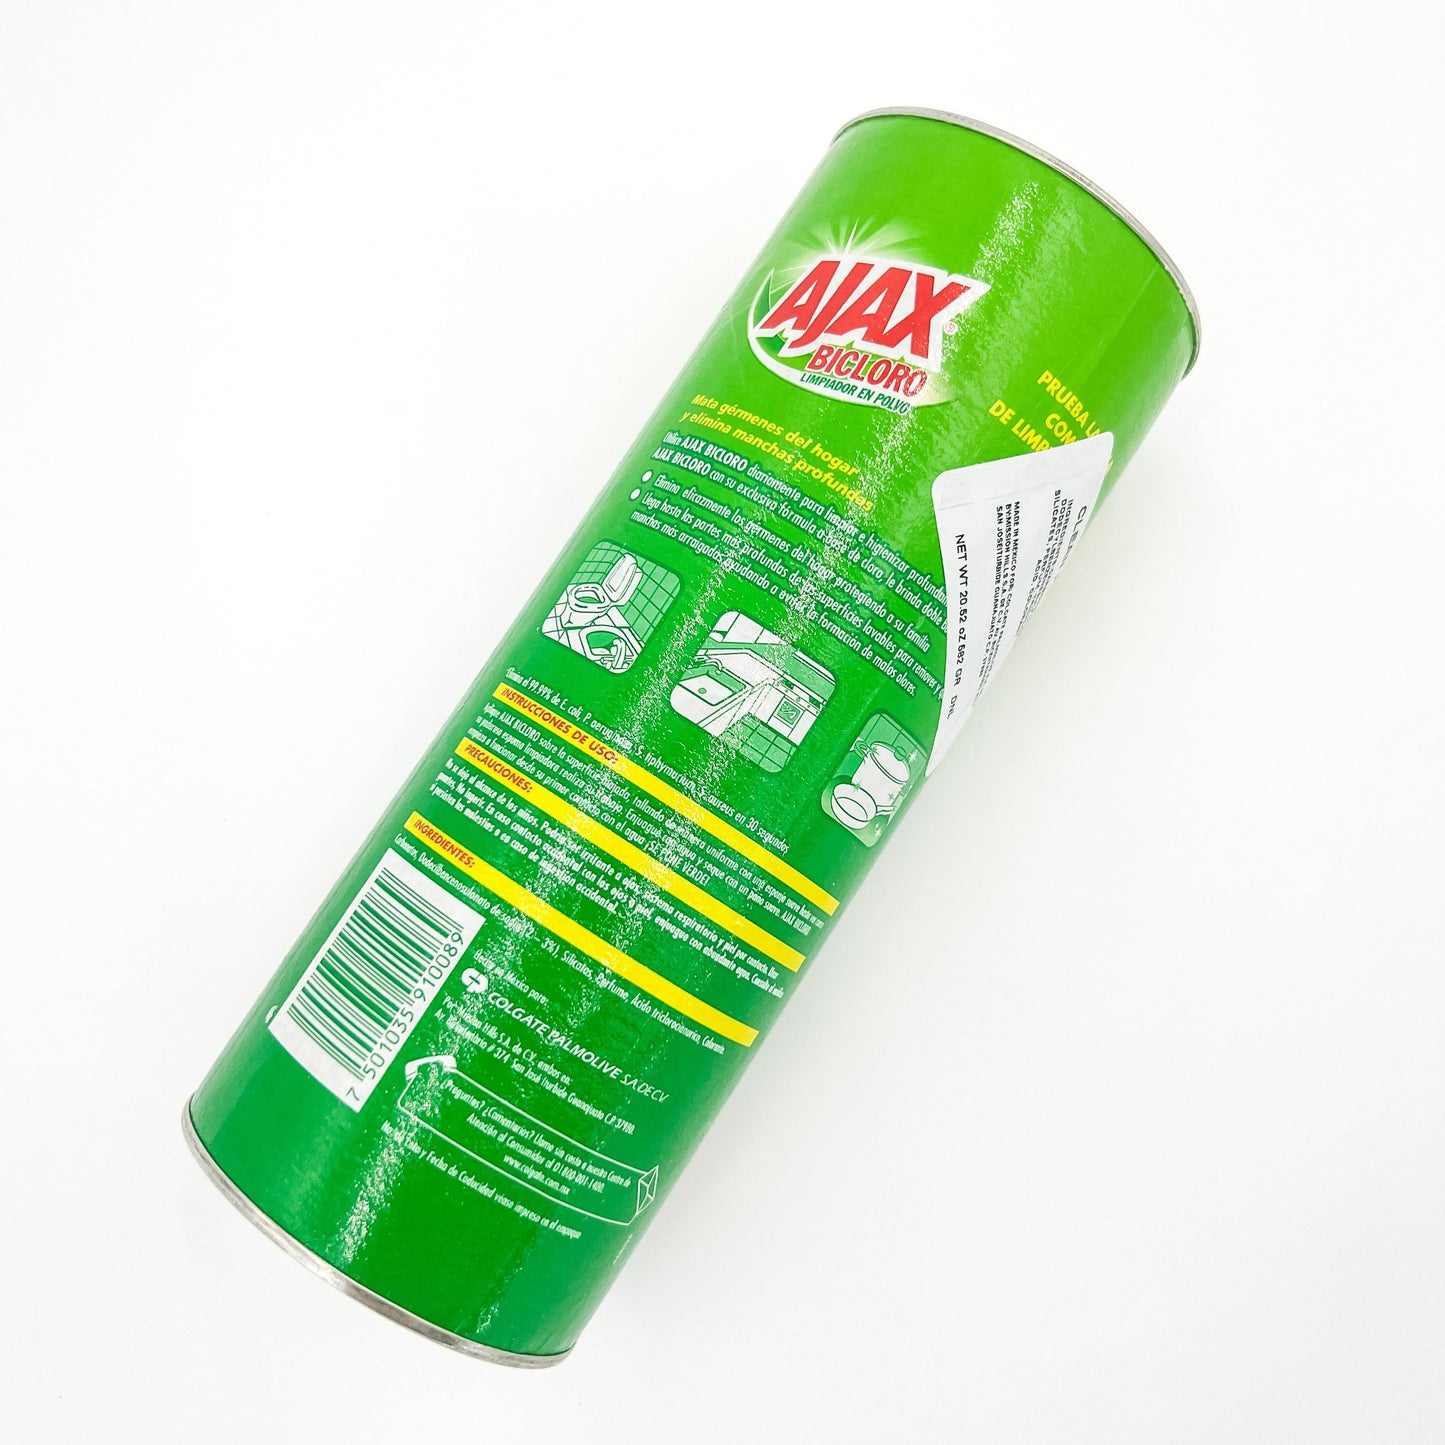 Ajax Bicloro Powder Cleanser